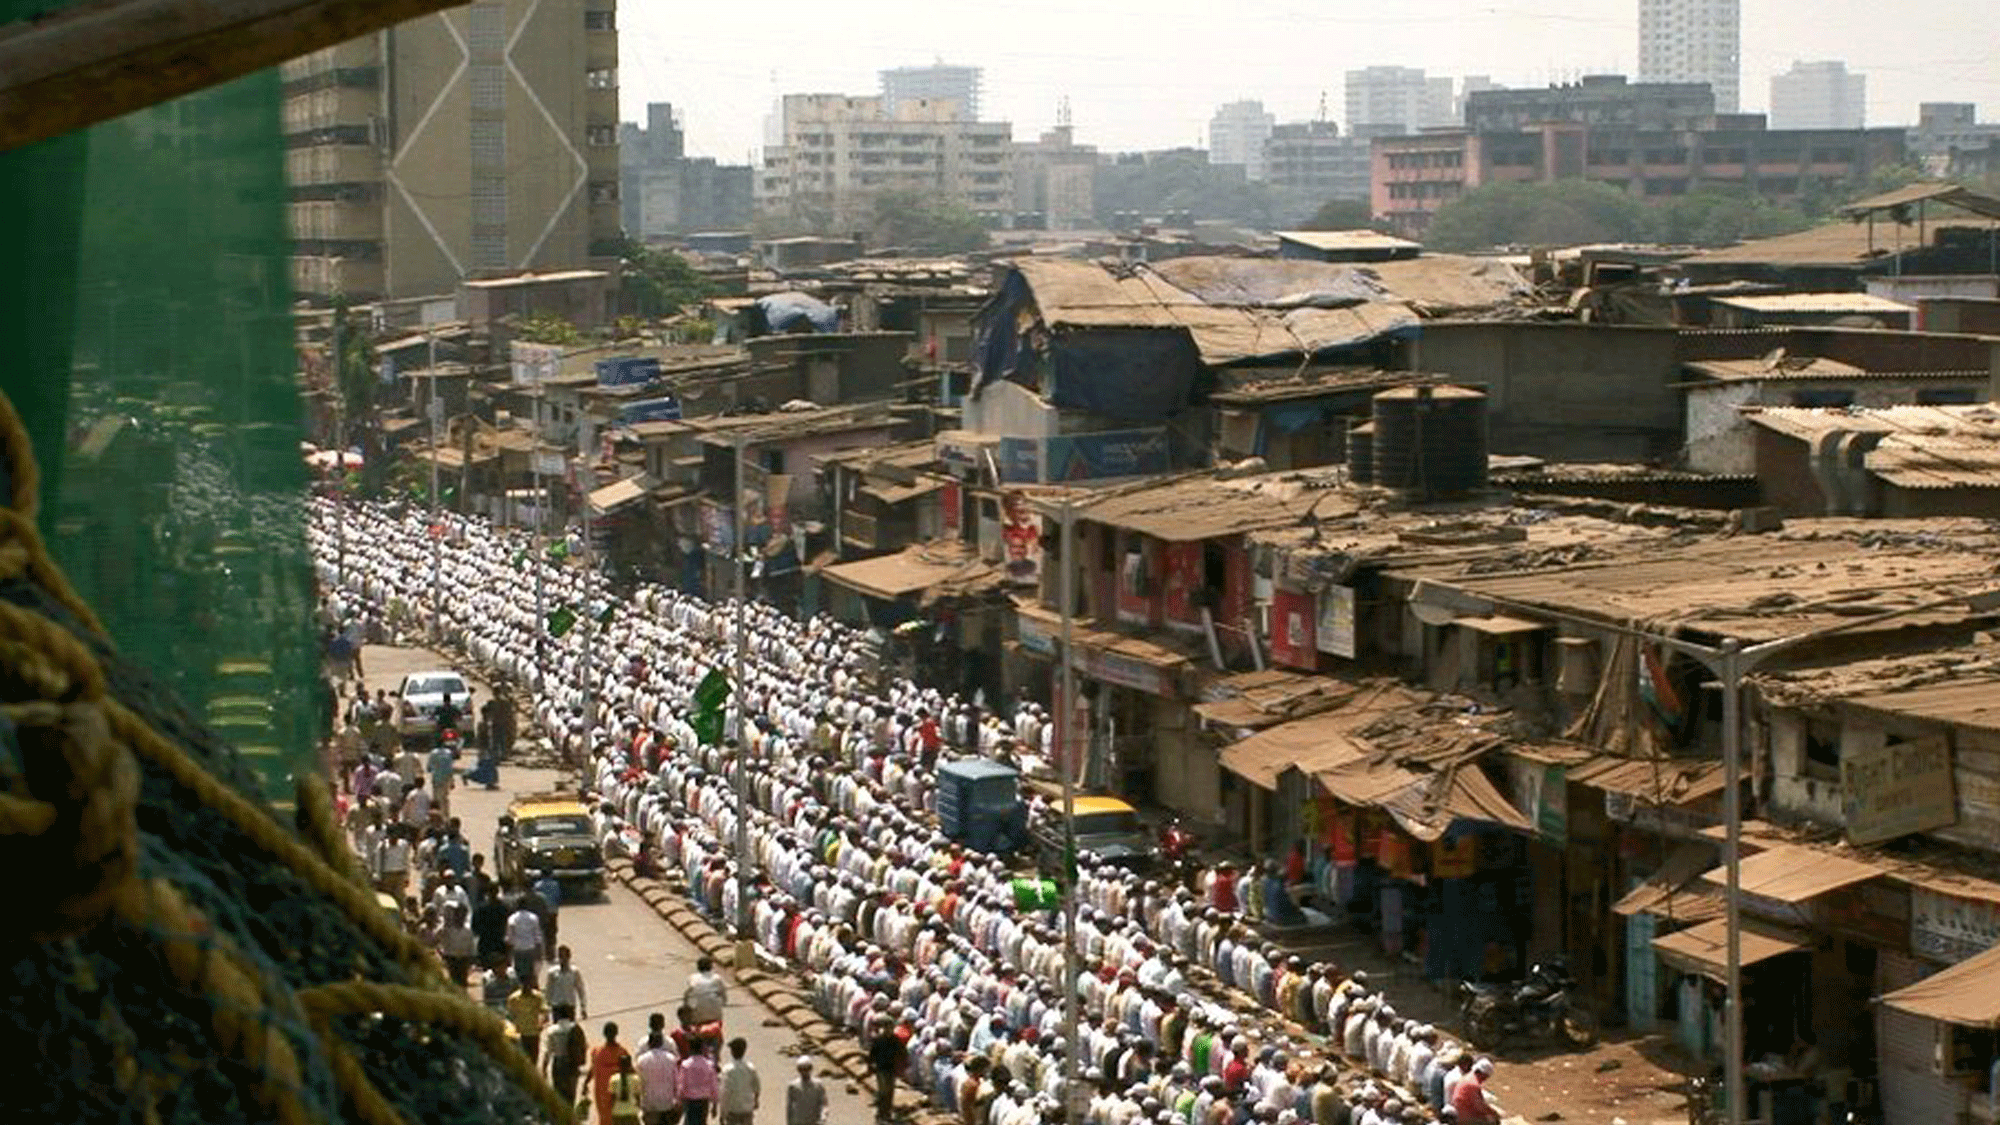 Dharavi slum of Mumbai. (Photo: Facebook/<a href="https://www.facebook.com/459169530577/photos/a.10151349111625578.818001.459169530577/10151349138230578/?type=1&amp;theater">Dharavi slum for sale</a>)